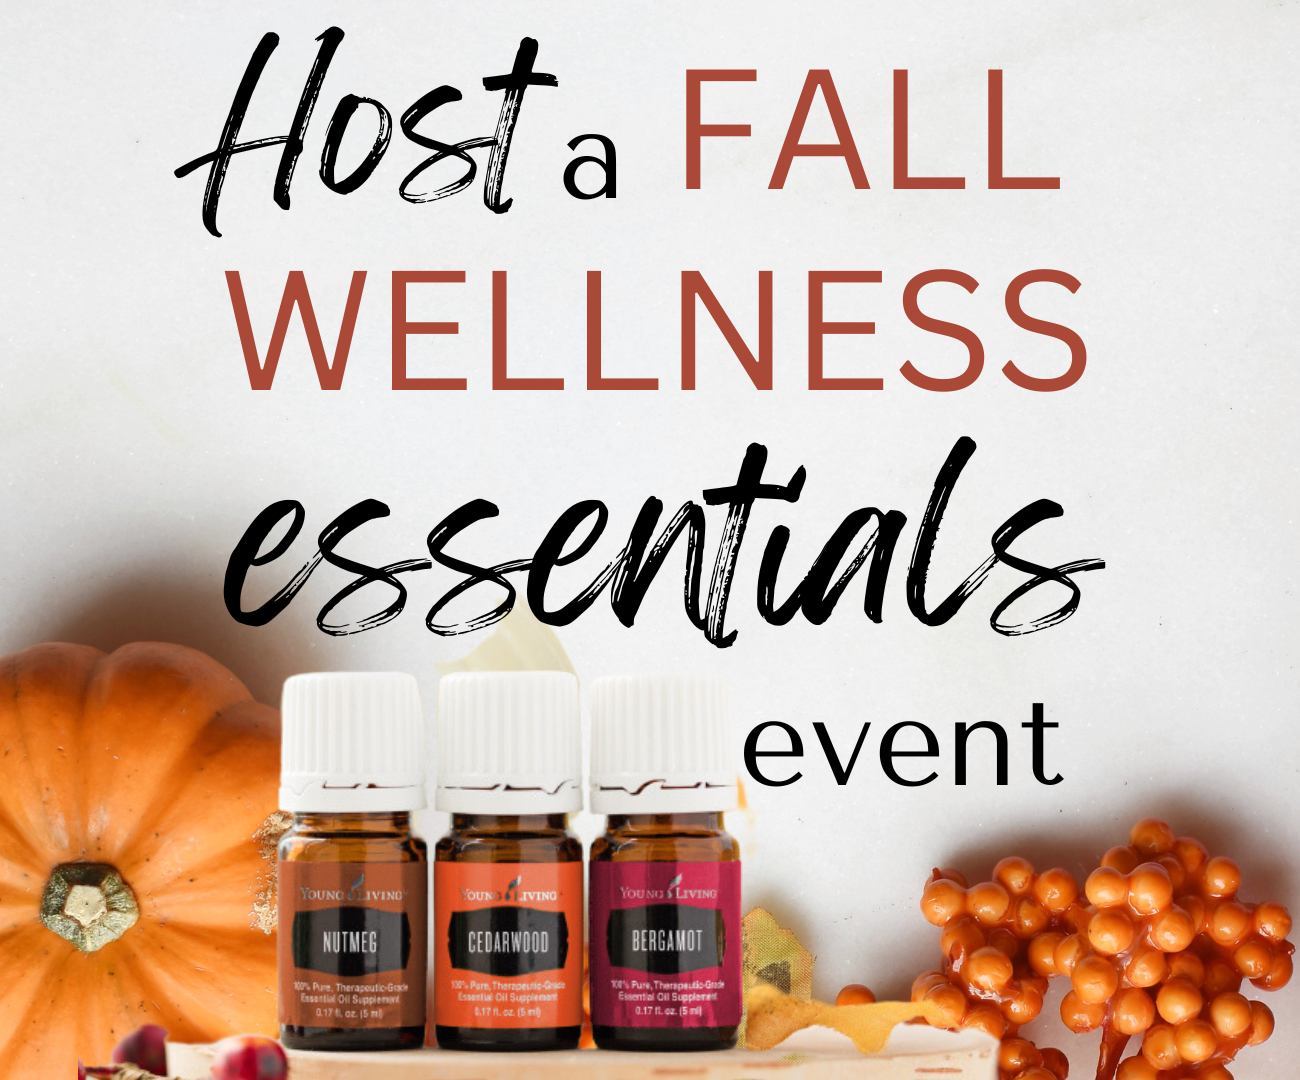 Host a Fall Wellness Essentials Event